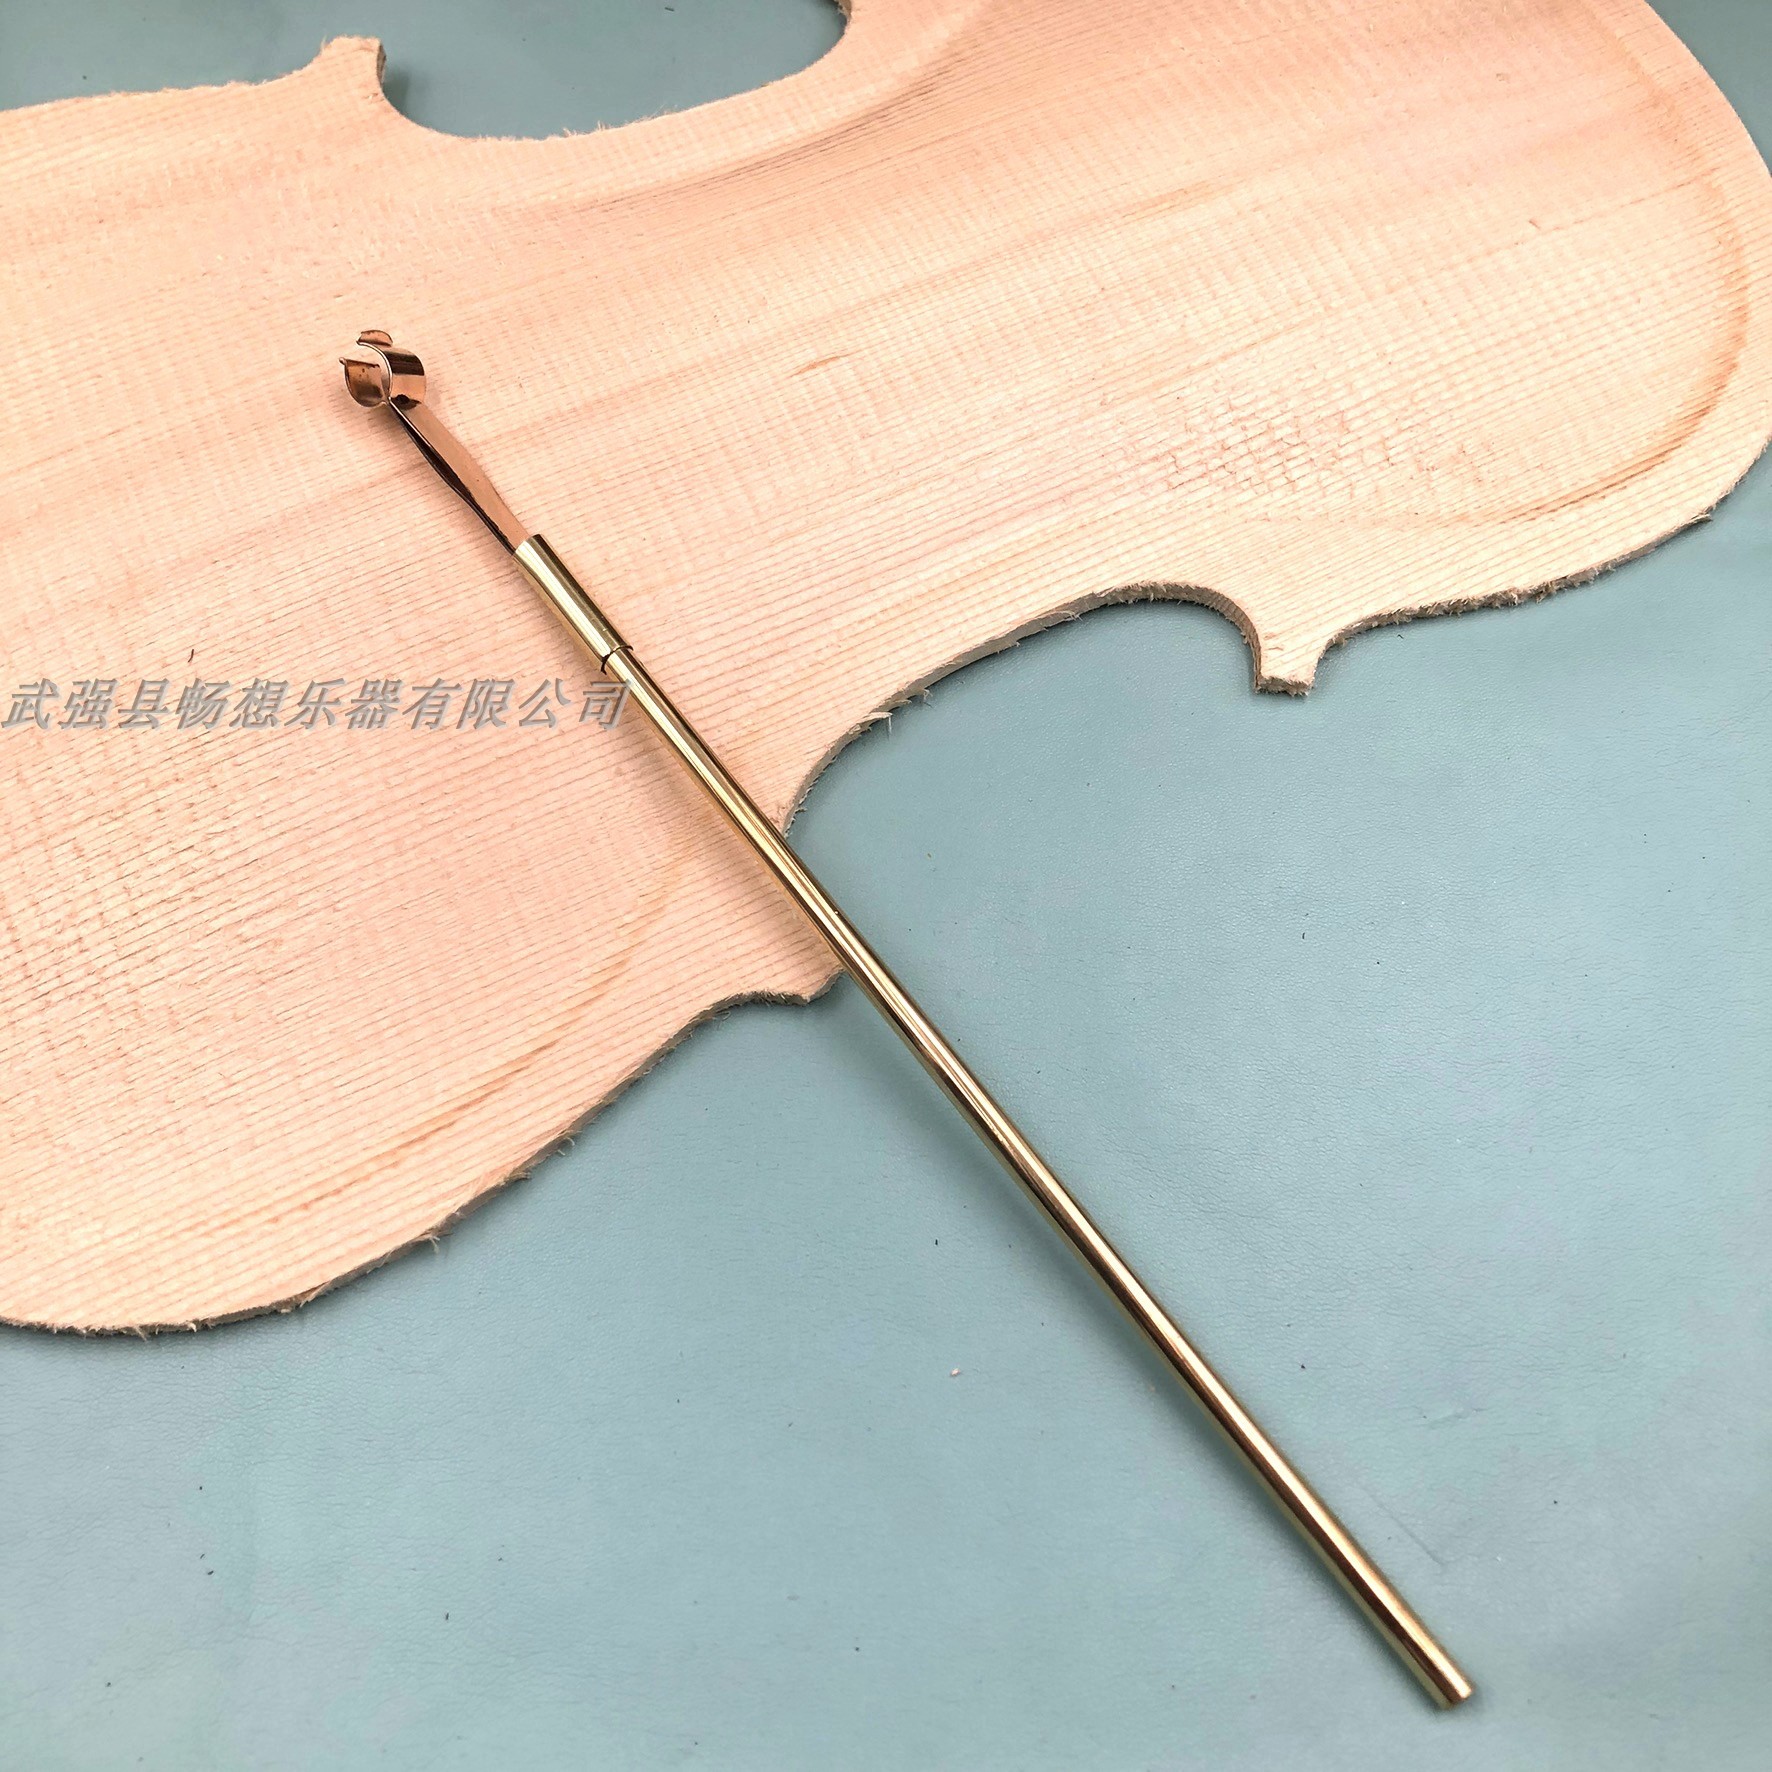 Cello sound post retriever, luthier tool reparatie cello gereedschap